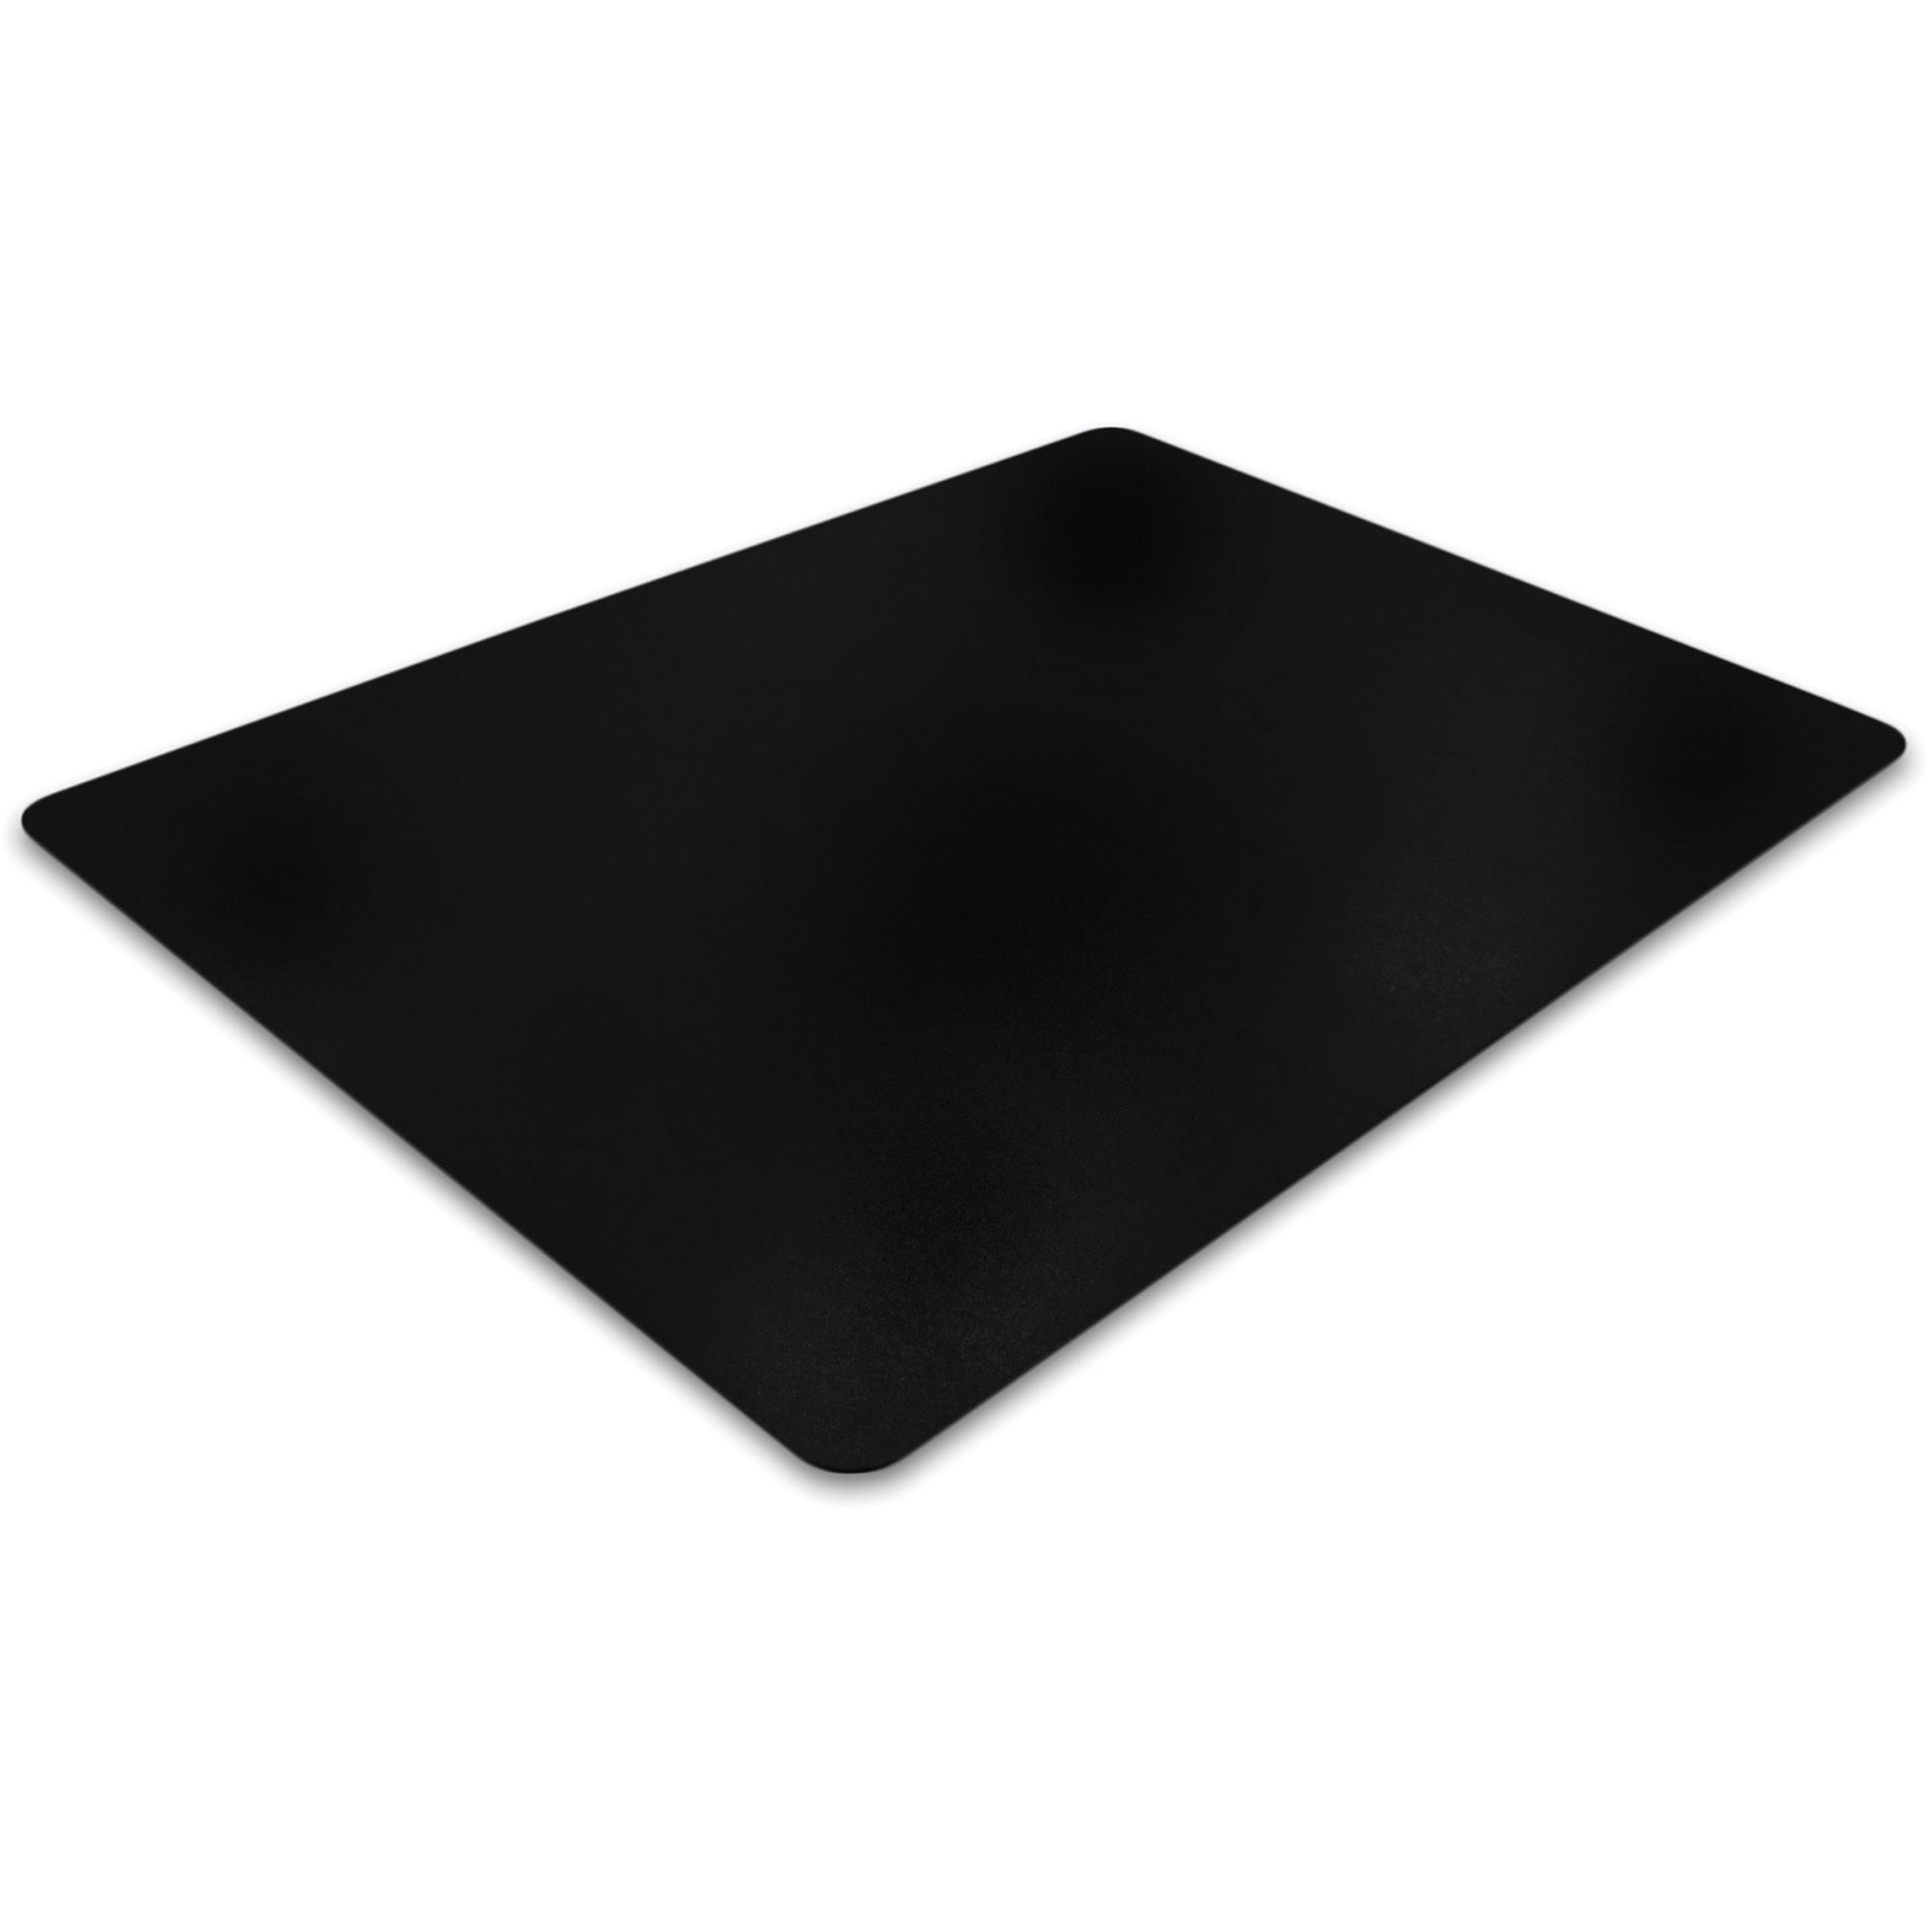 advantagemat-black-vinyl-rectangular-chair-mat-for-hard-floor-48-x-60-hard-floor-60-length-x-48-width-x-0080-depth-x-0080-thickness-rectangular-classic-polyvinyl-chloride-pvc-black-1each-taa-compliant_flrfc124860hebv - 1